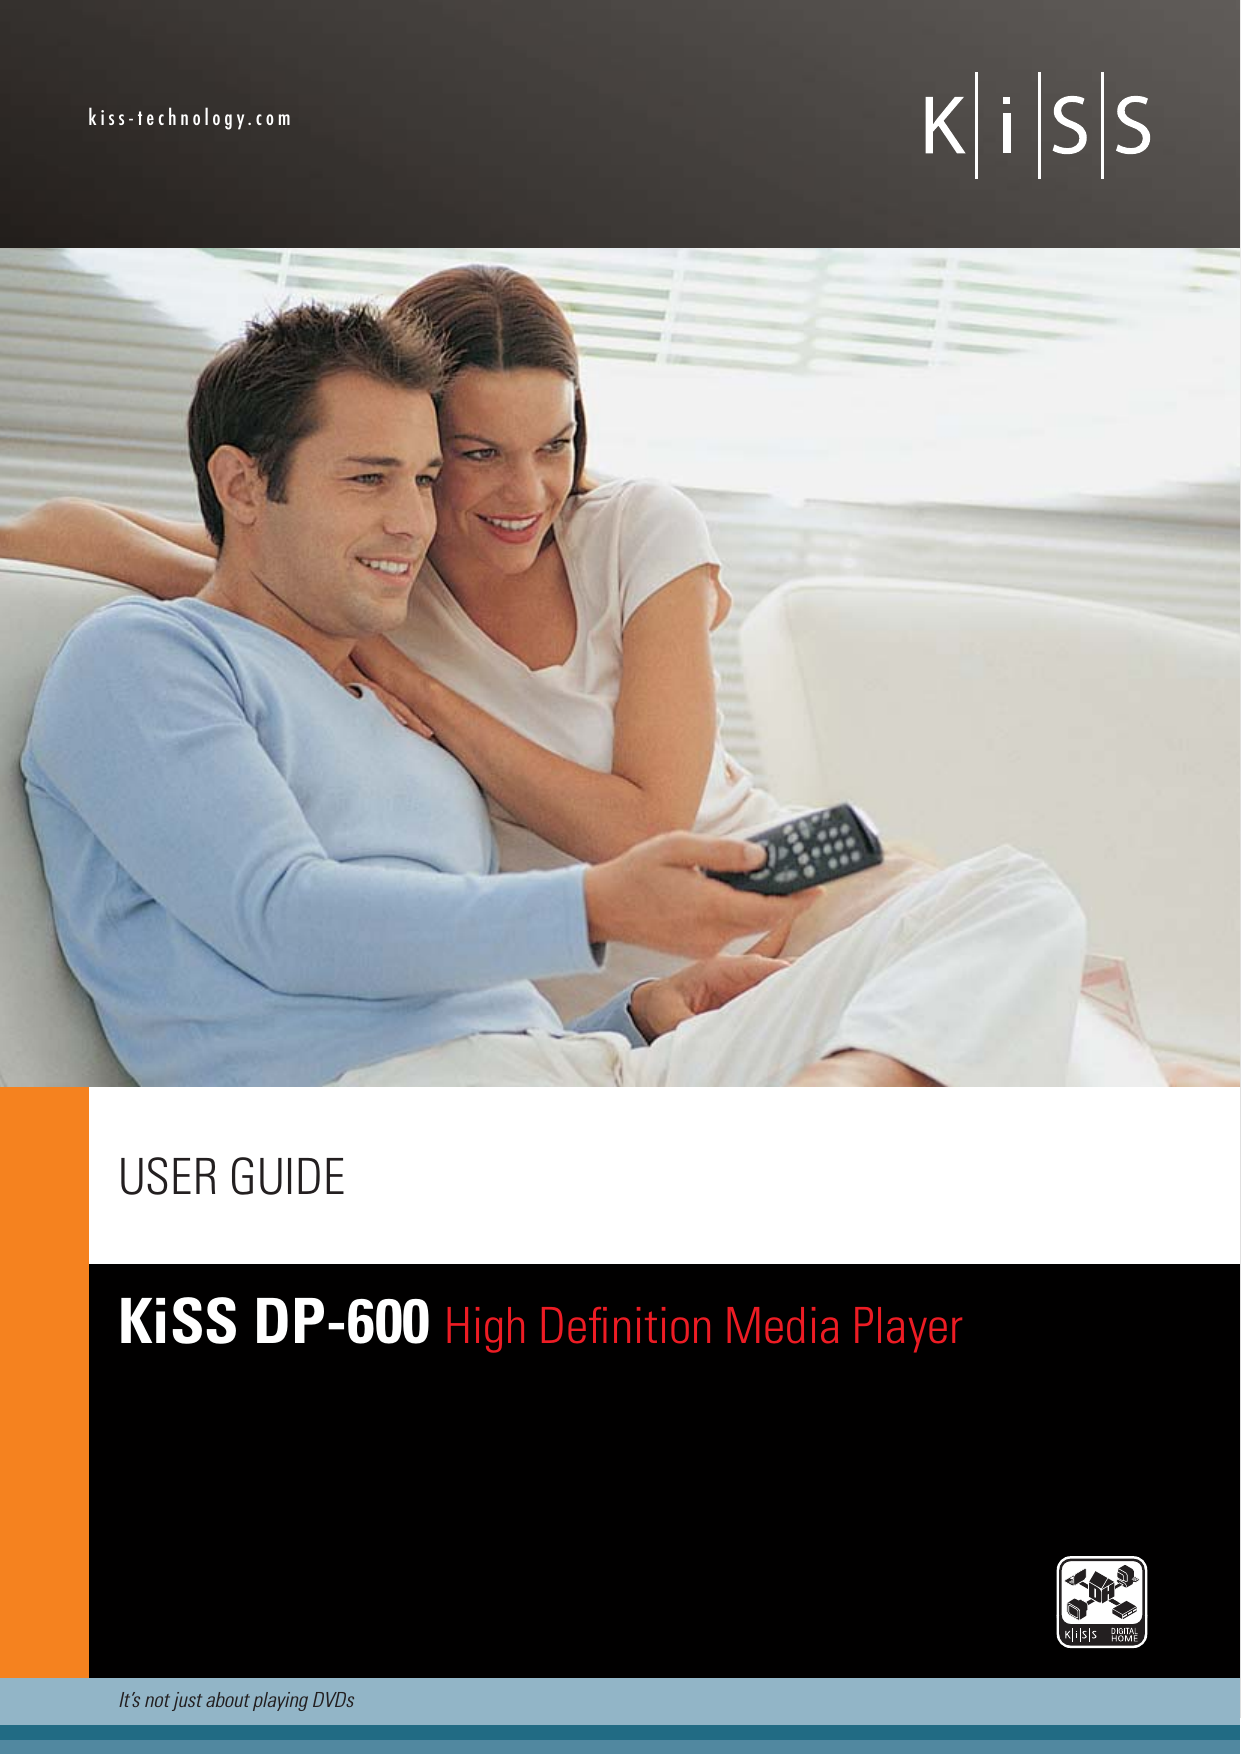 englishIt’s not just about playing DVDsKiSS DP-600 High Deﬁ nition Media PlayerUSER GUIDEkiss-technology.com